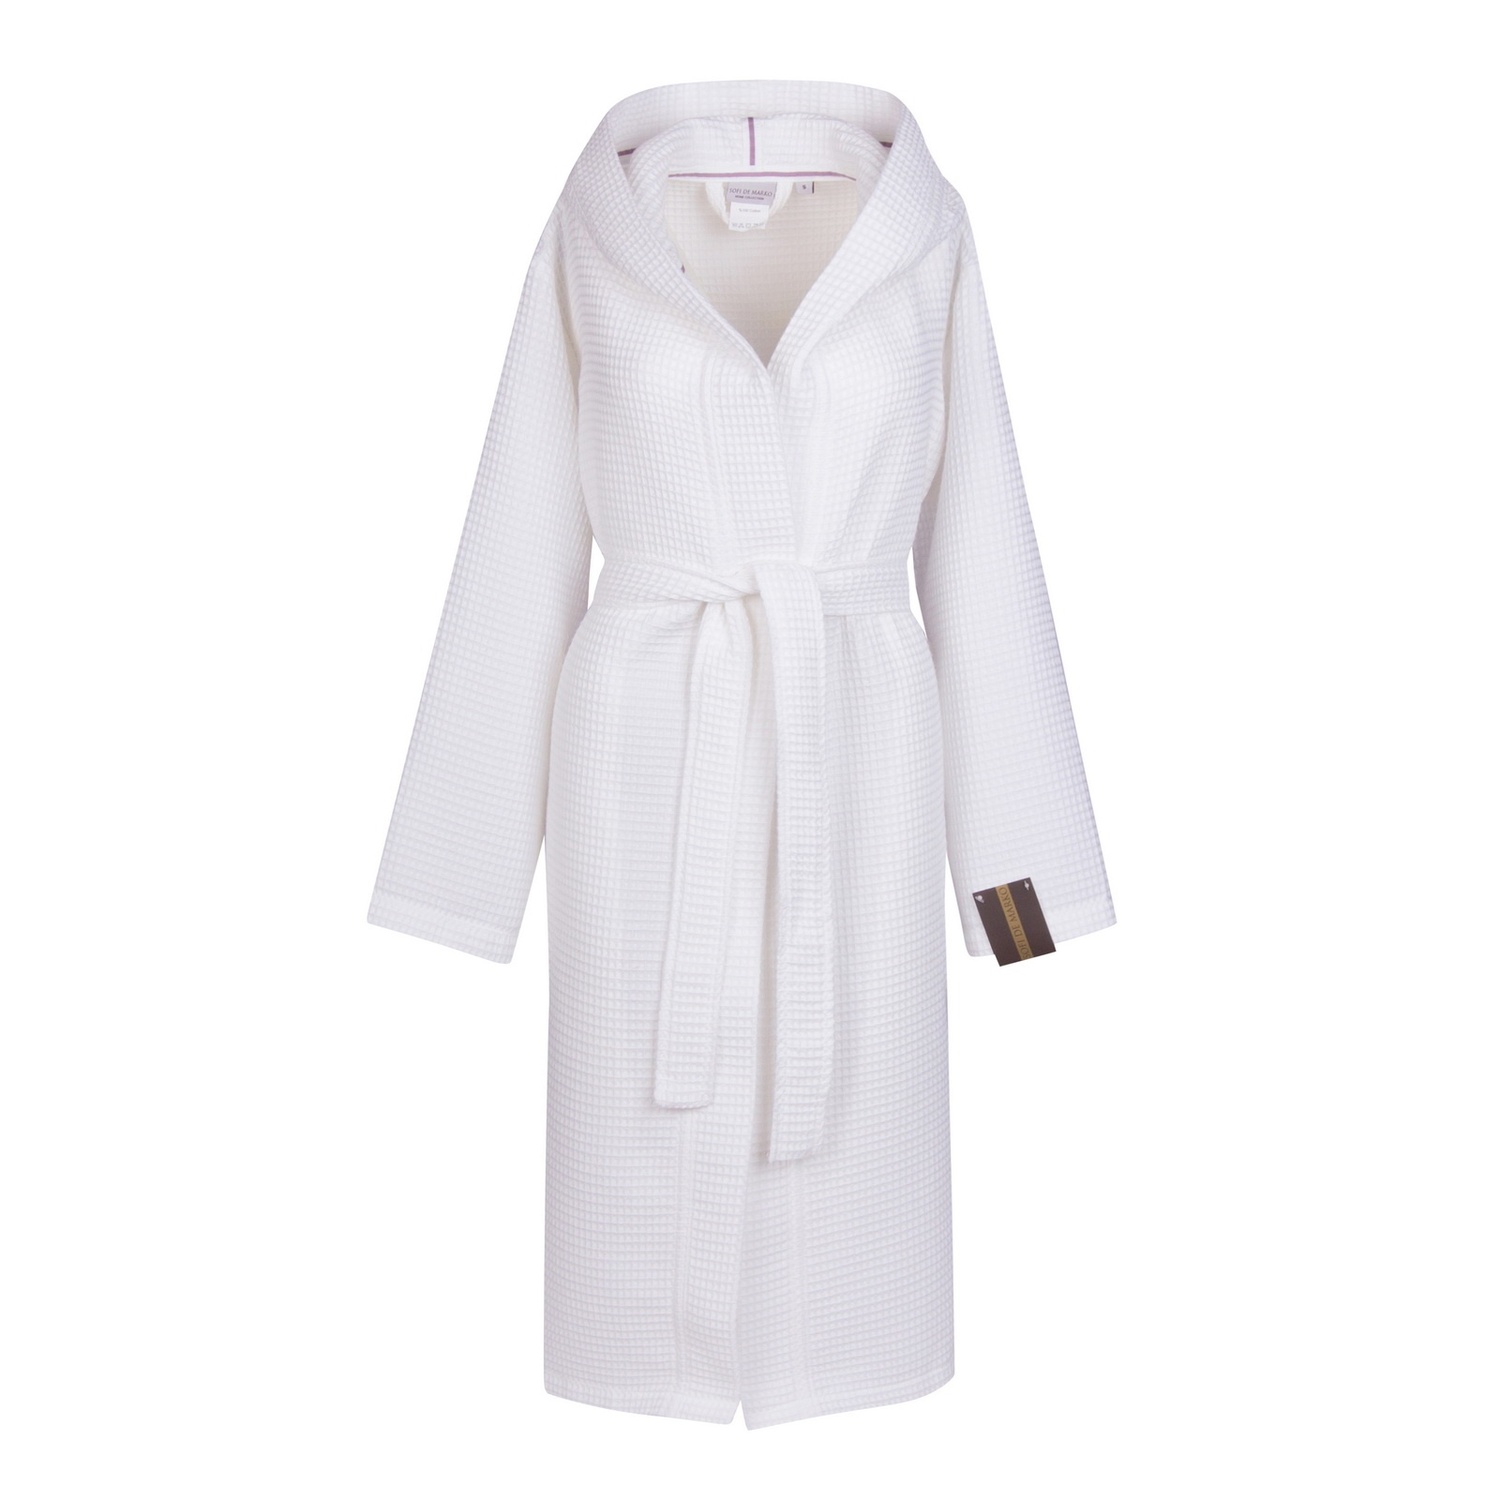 Банный халат Наоми цвет: белый (M)